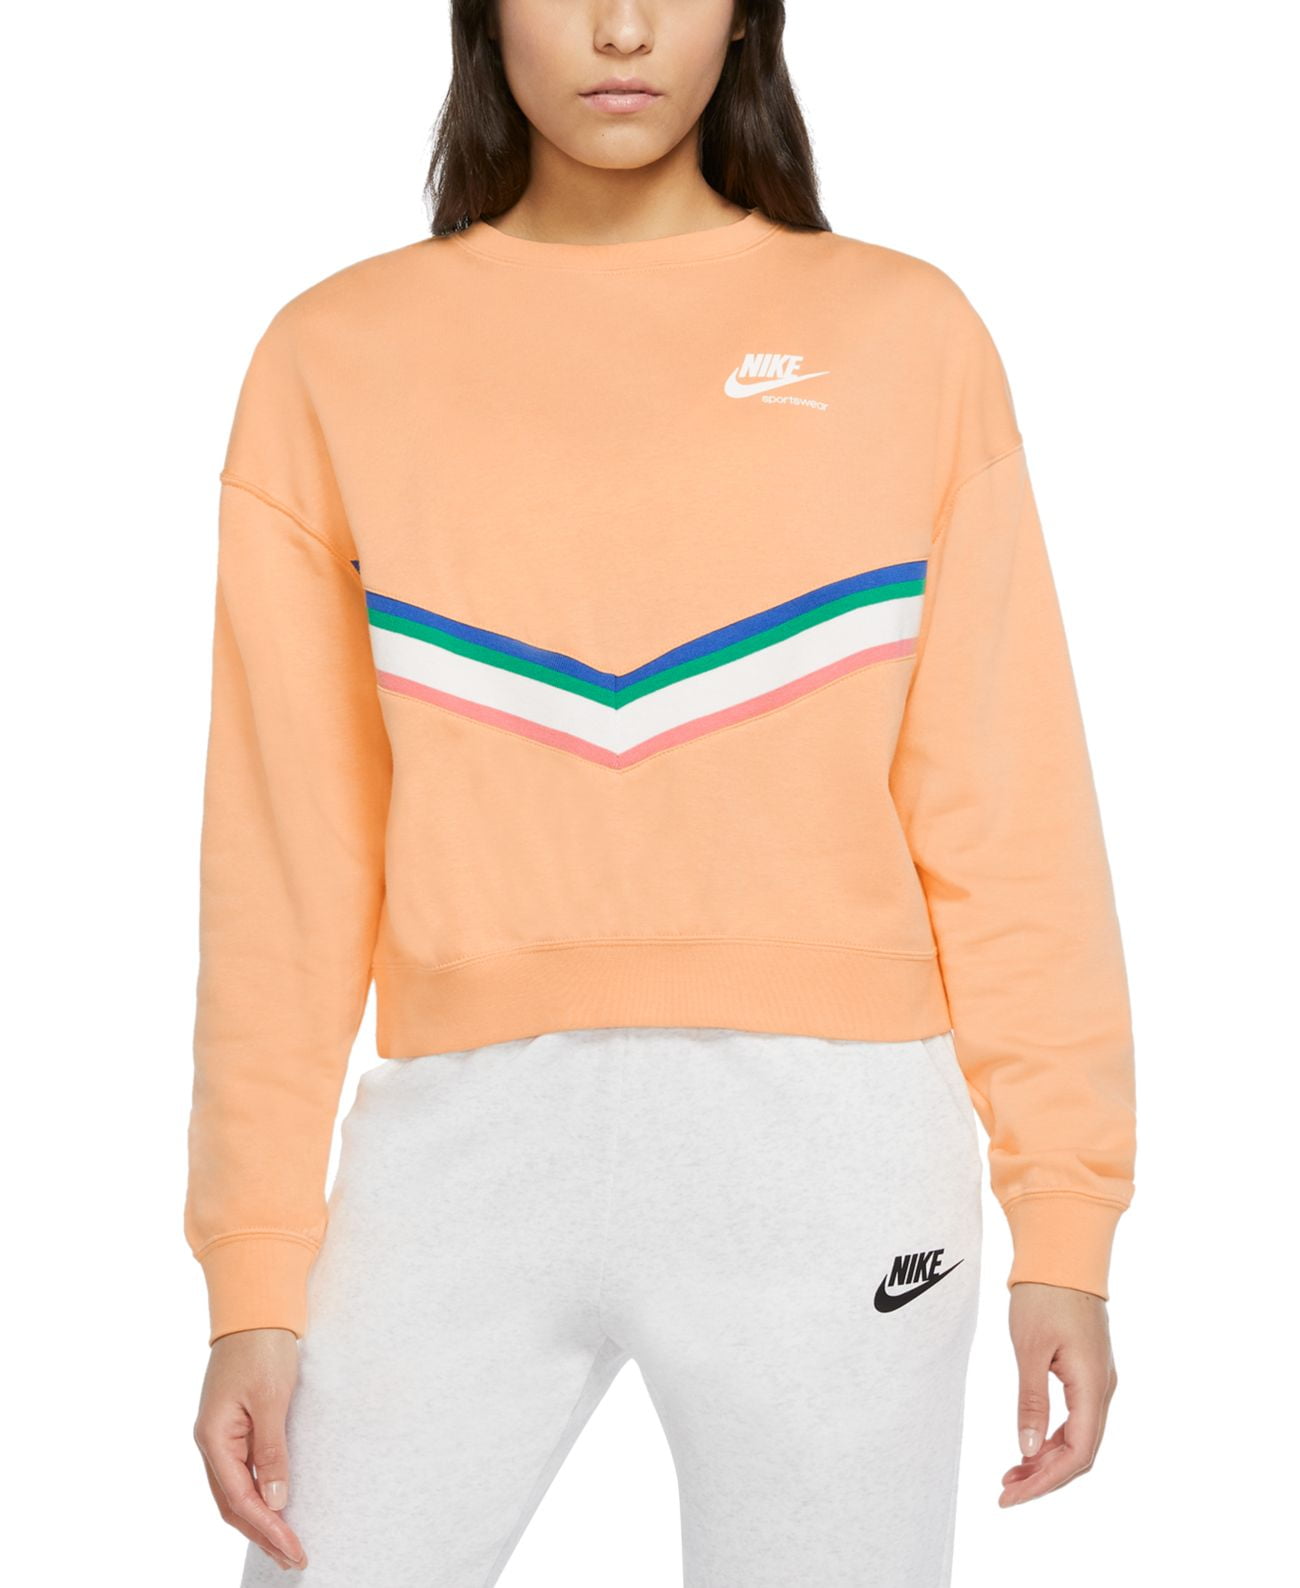 Nike Women's Heritage Fleece Sweatshirt, Coral, X-Small - Walmart.com